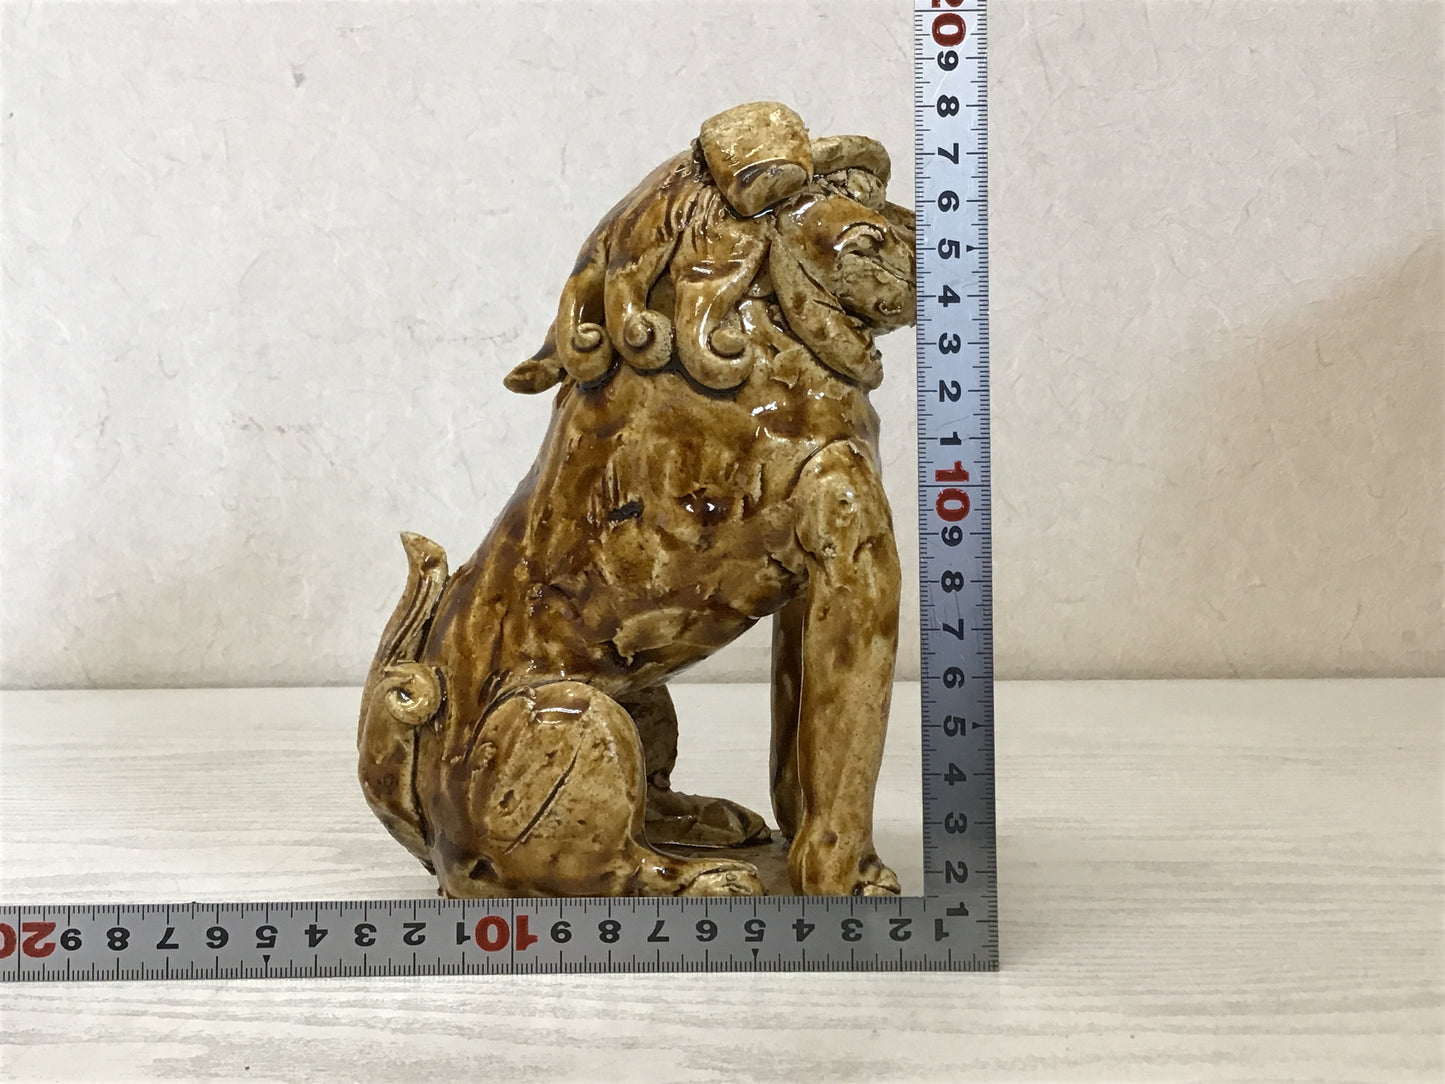 Y1684 OKIMONO Seto-ware Guardian Dog figurine signed box Japan antique vintage